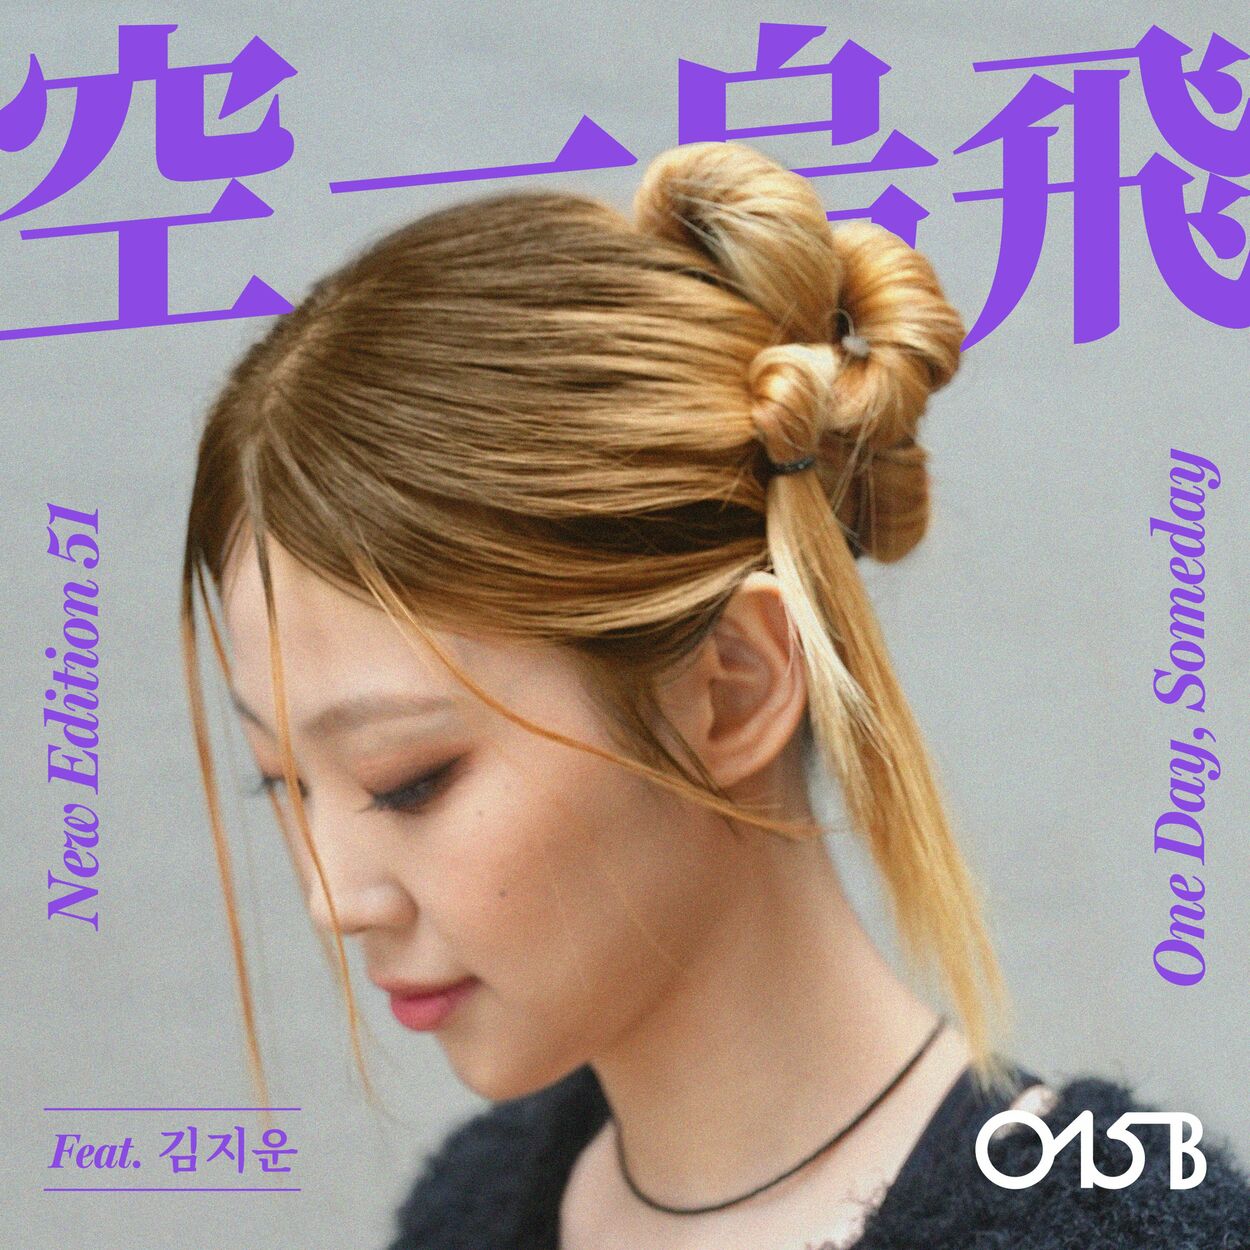 015B – New Edition 51 – Single